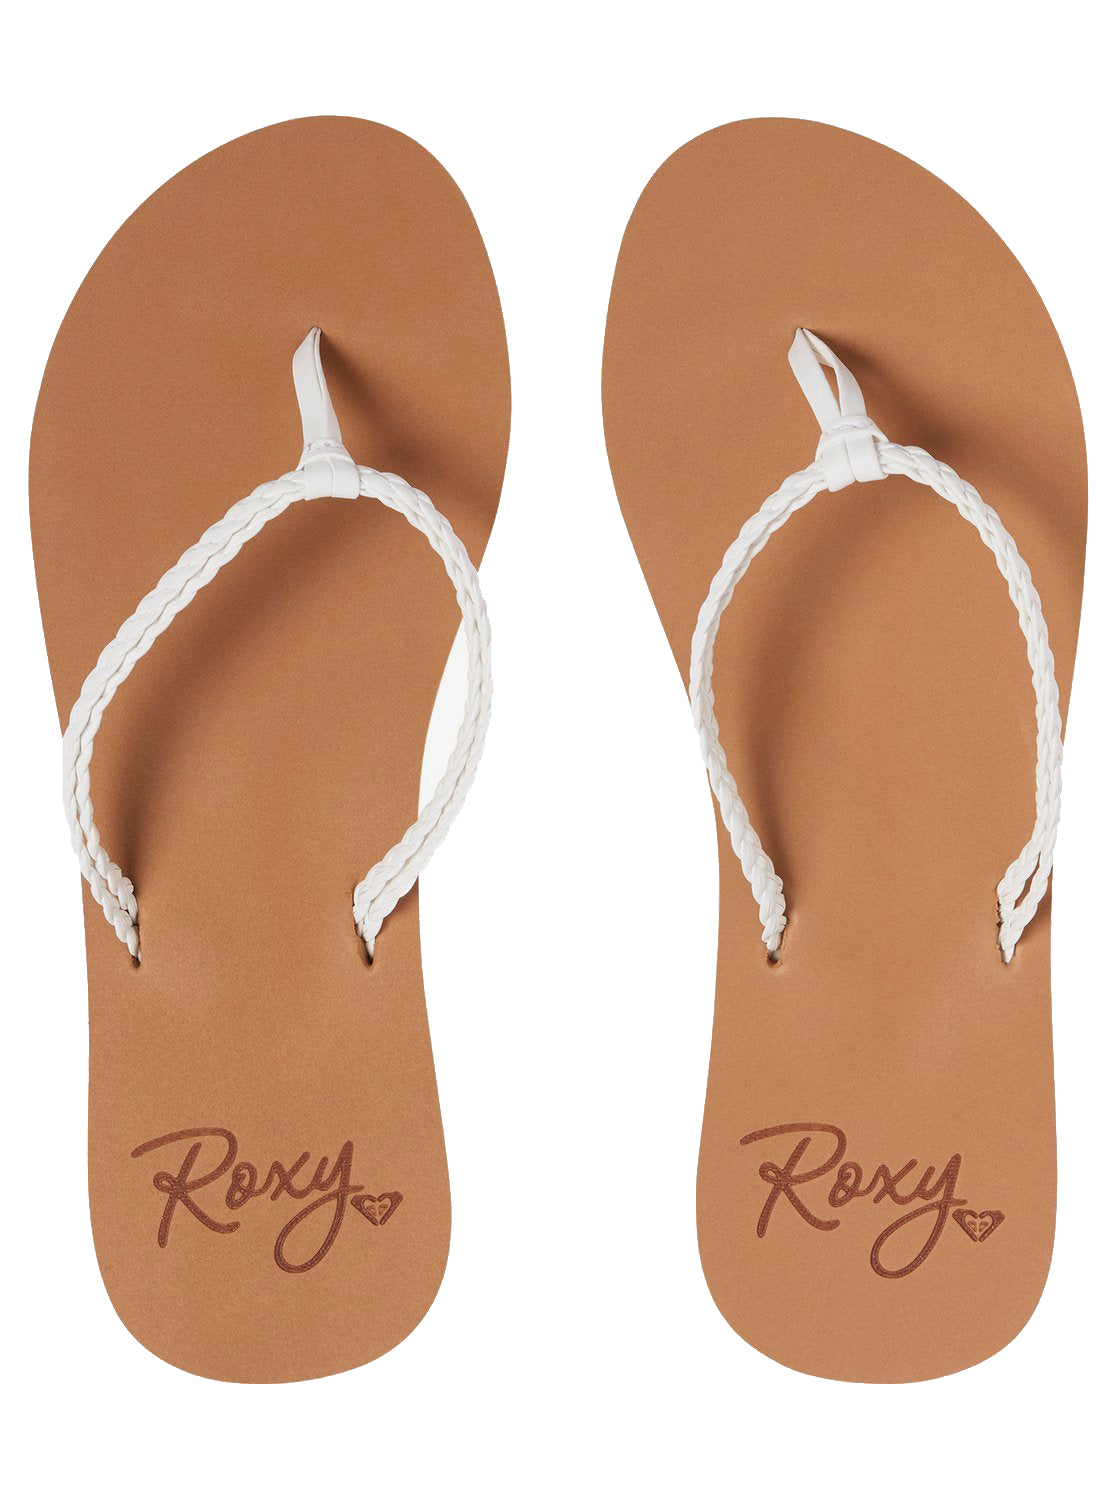 Roxy Costas Girls Sandals WHT-White 11 C